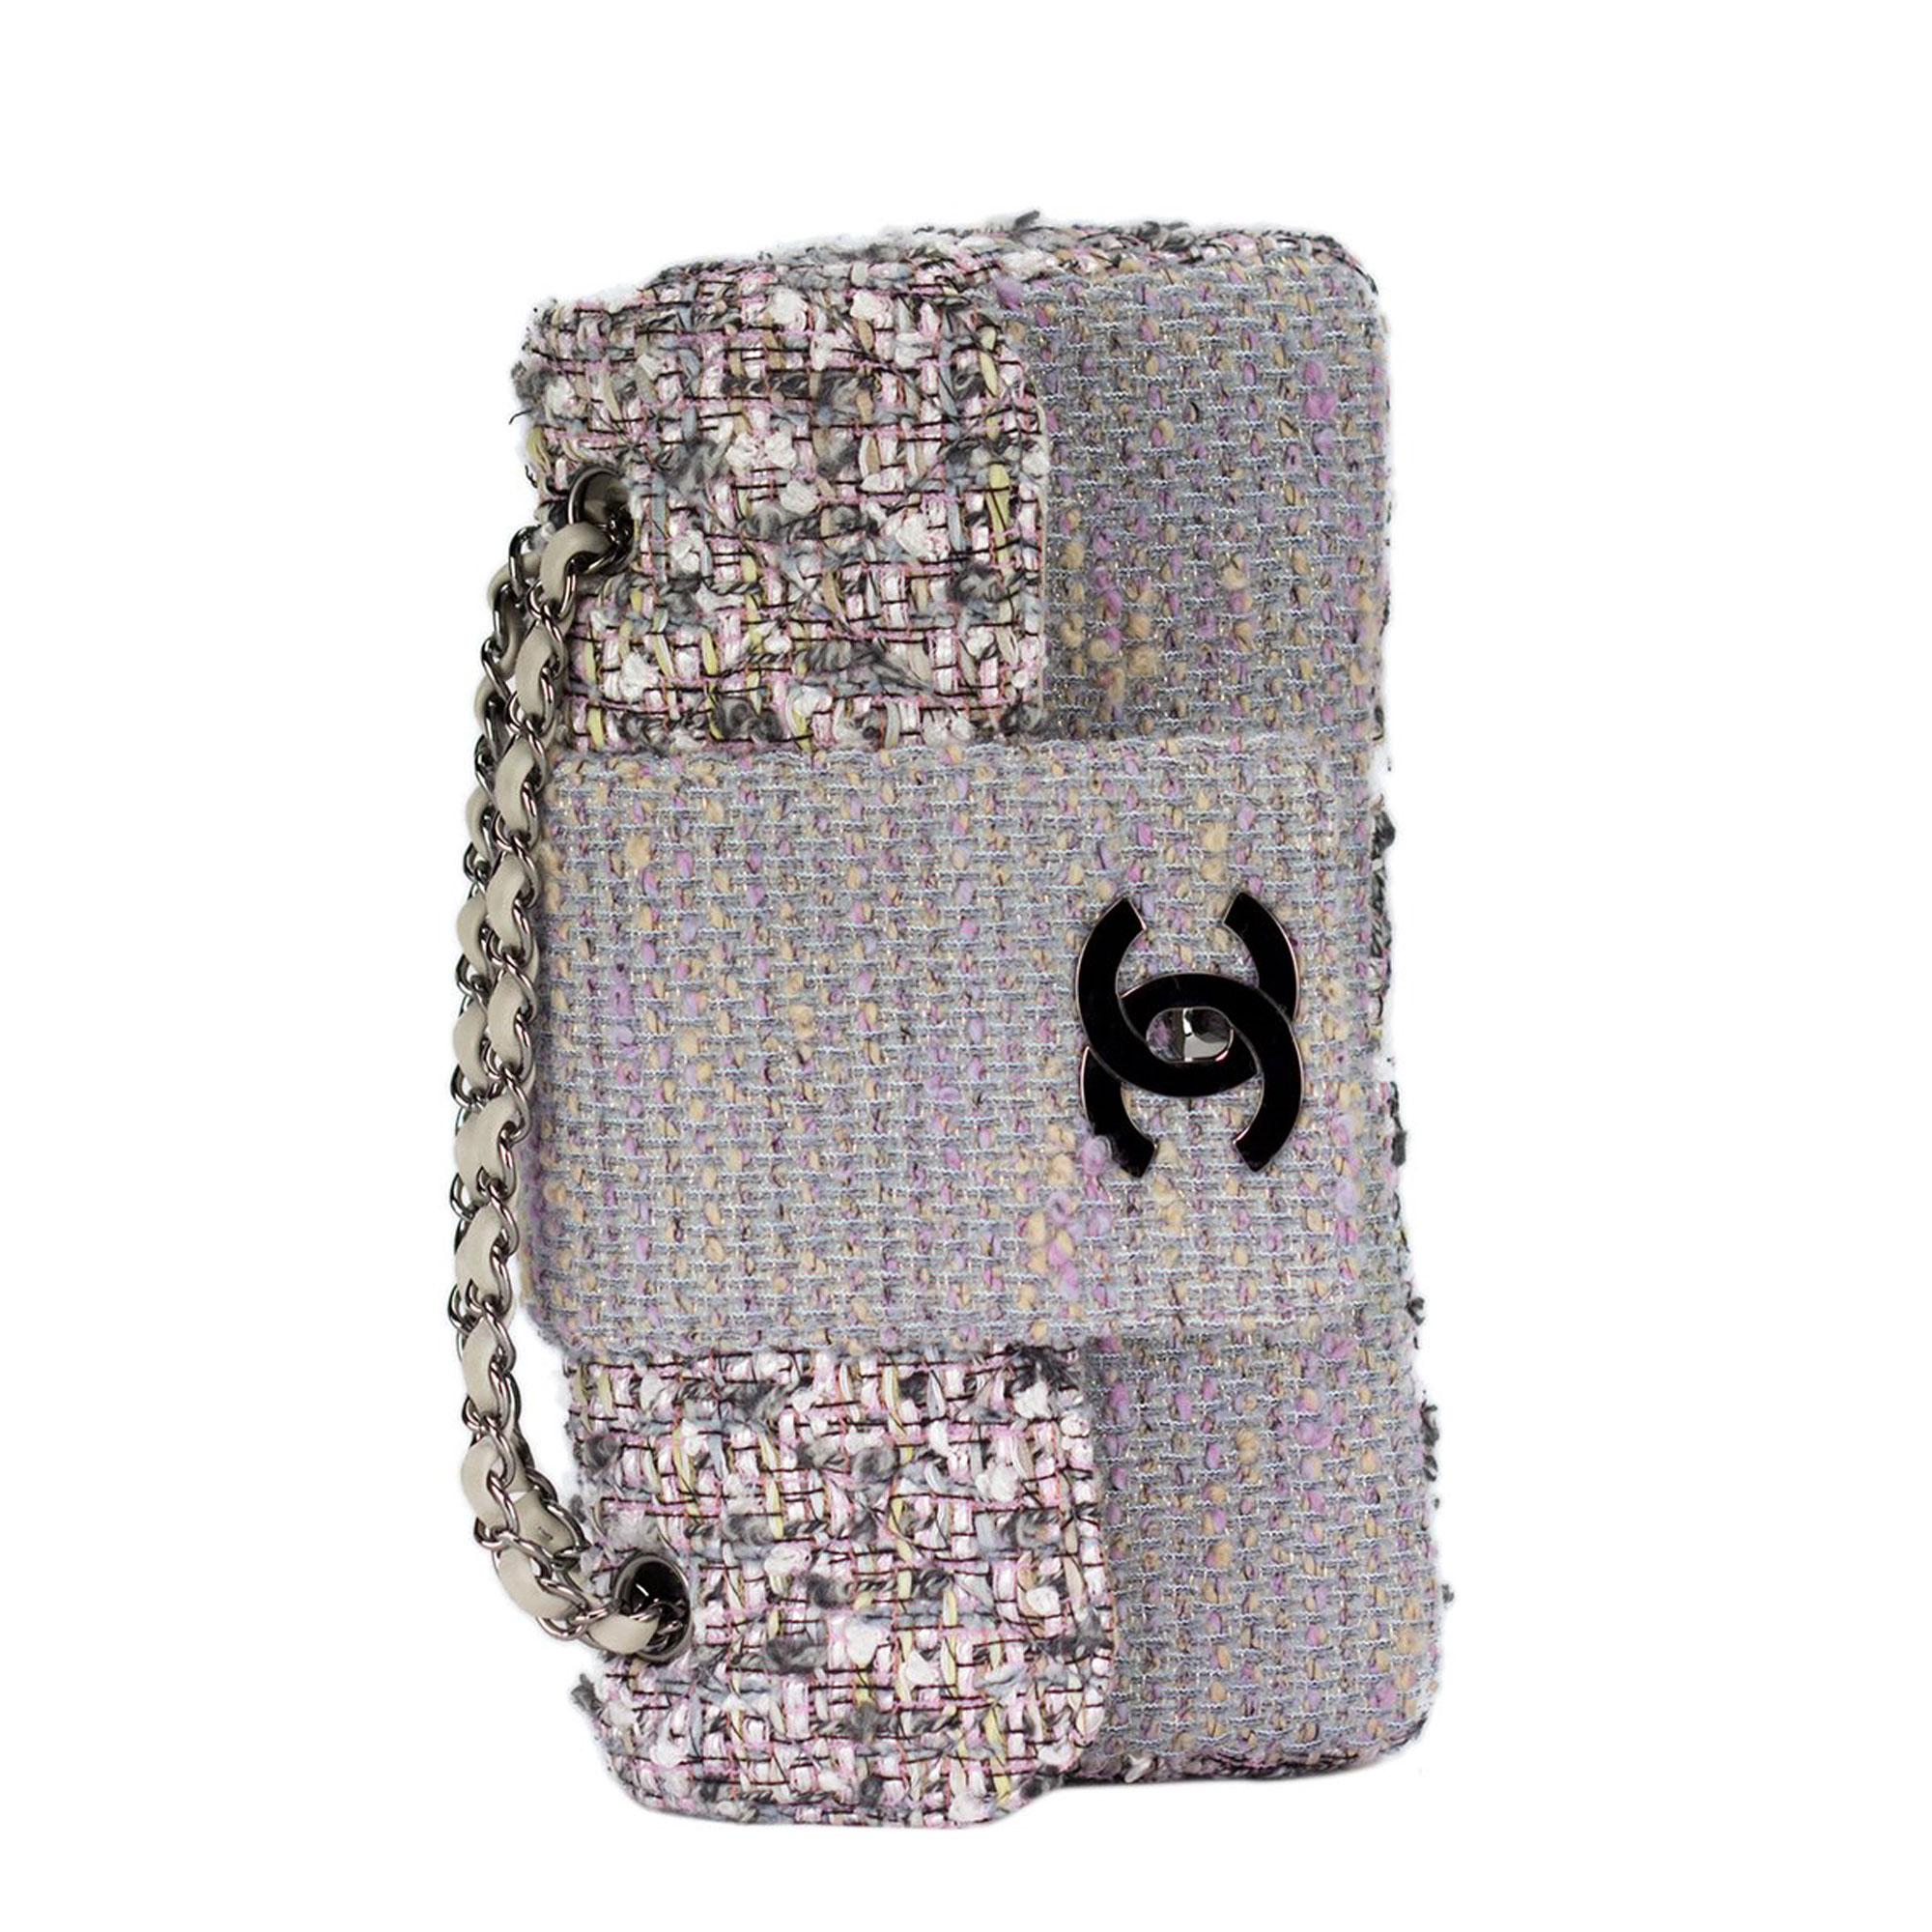 Chanel Chanel Jumbo Mehrfarbige pastellgraue Periwinkle Konfetti klassische Tweed-Klappentasche (Grau) im Angebot